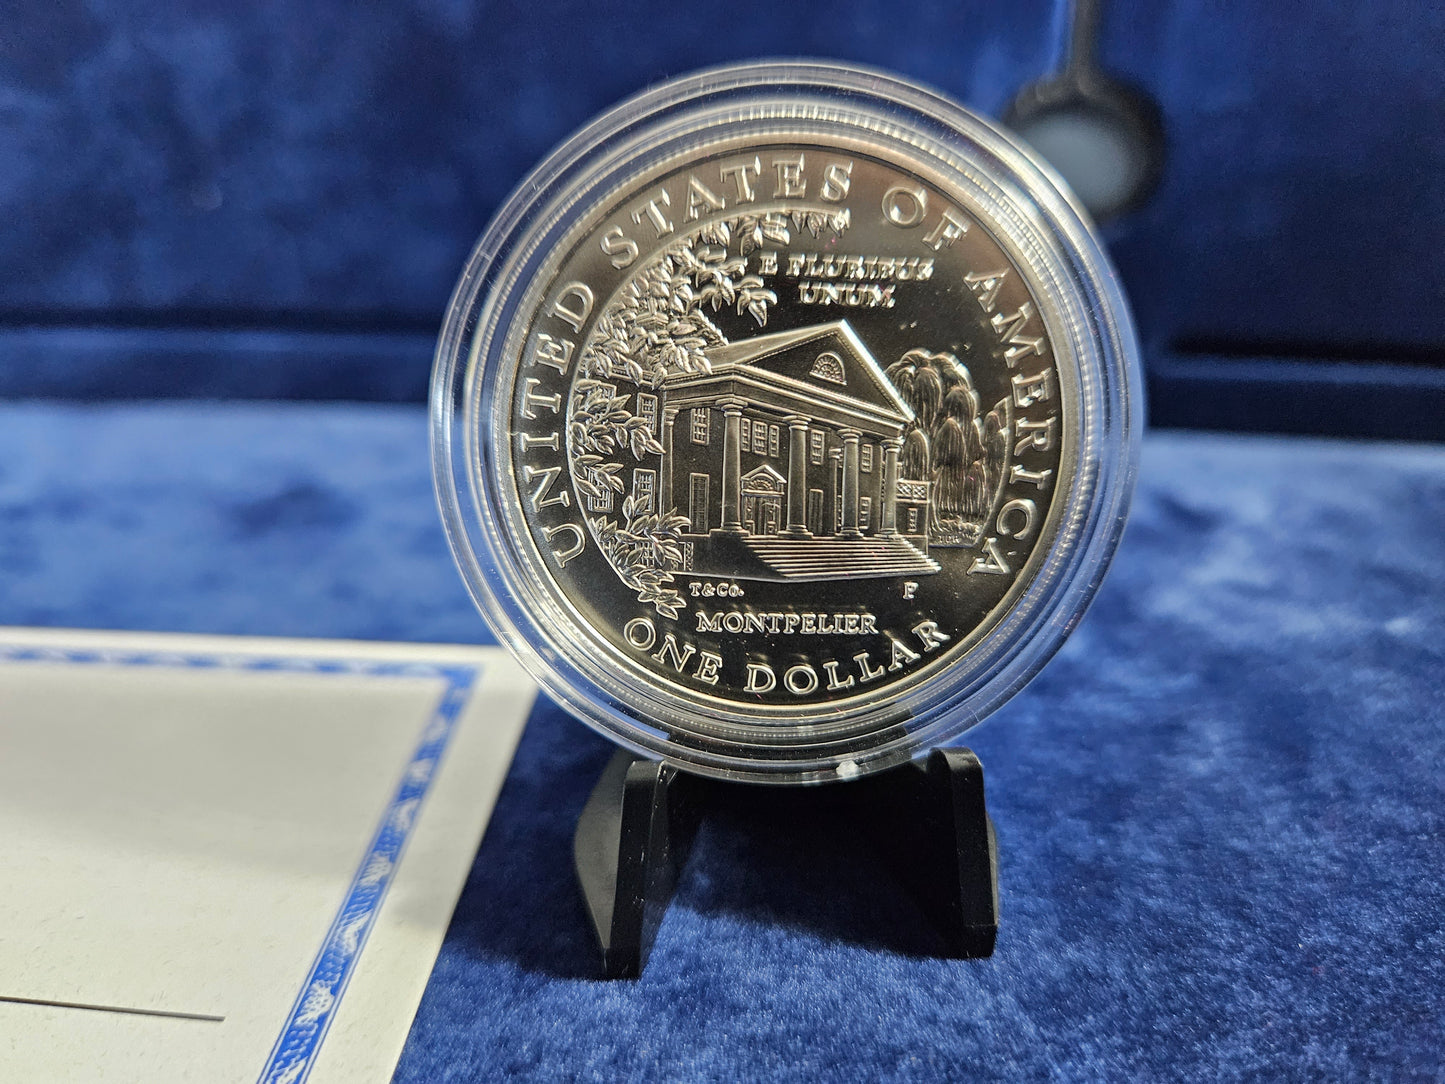 1999 Dolley Madison Silver Dollar 2 Coin Set US Mint Commemorative PR UNC $1 OGP